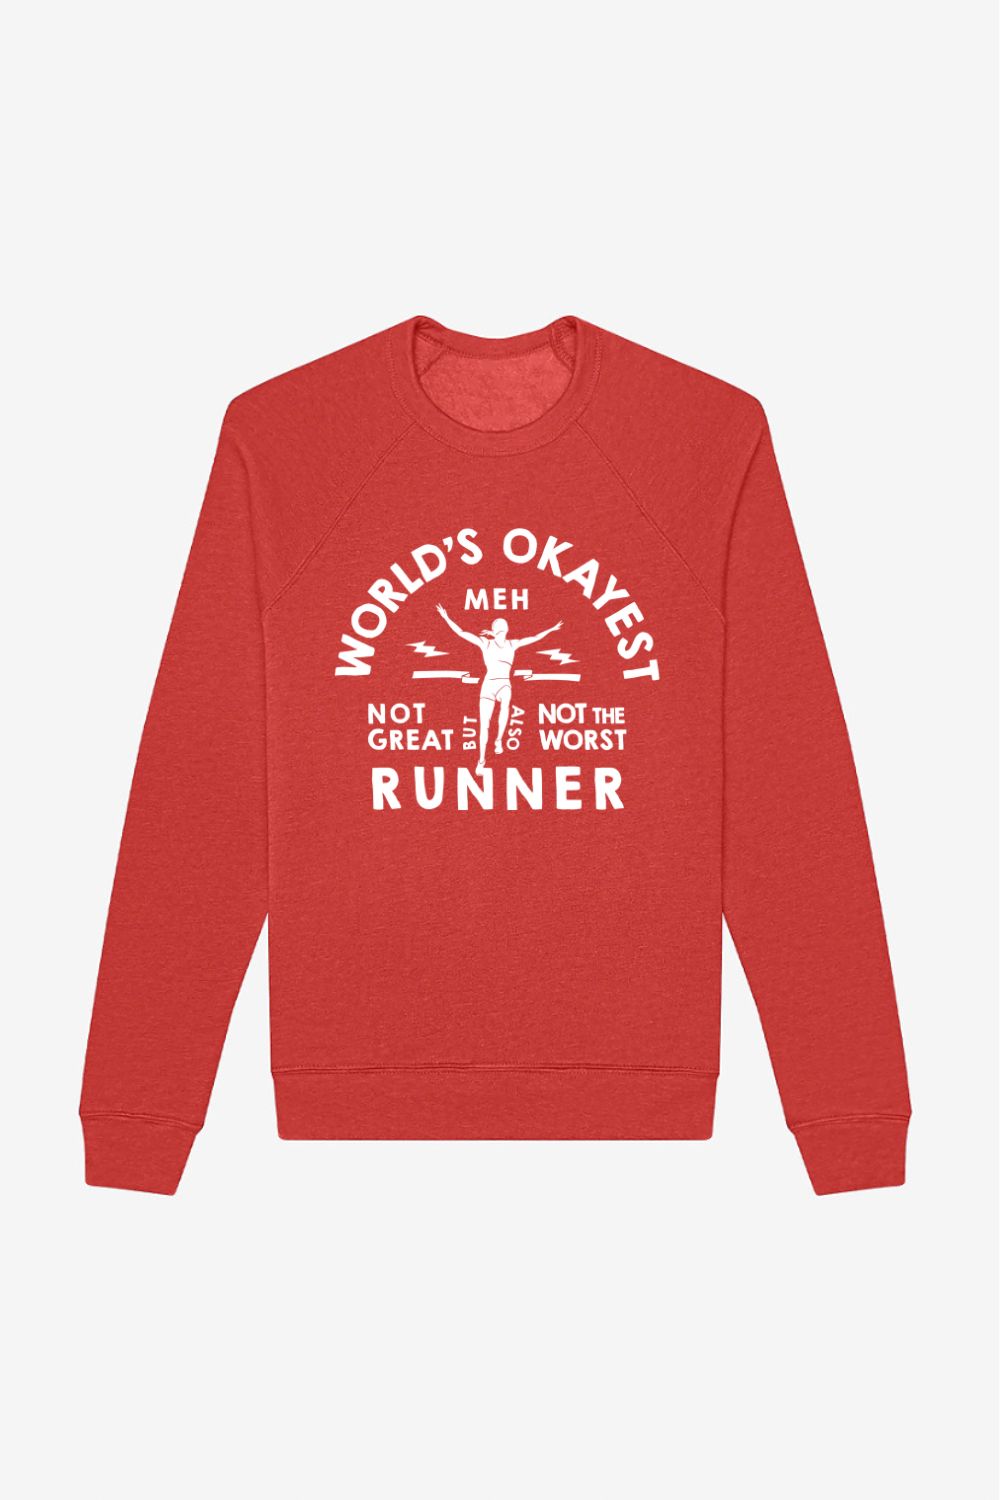 World's Okayest Runner Sweatshirt